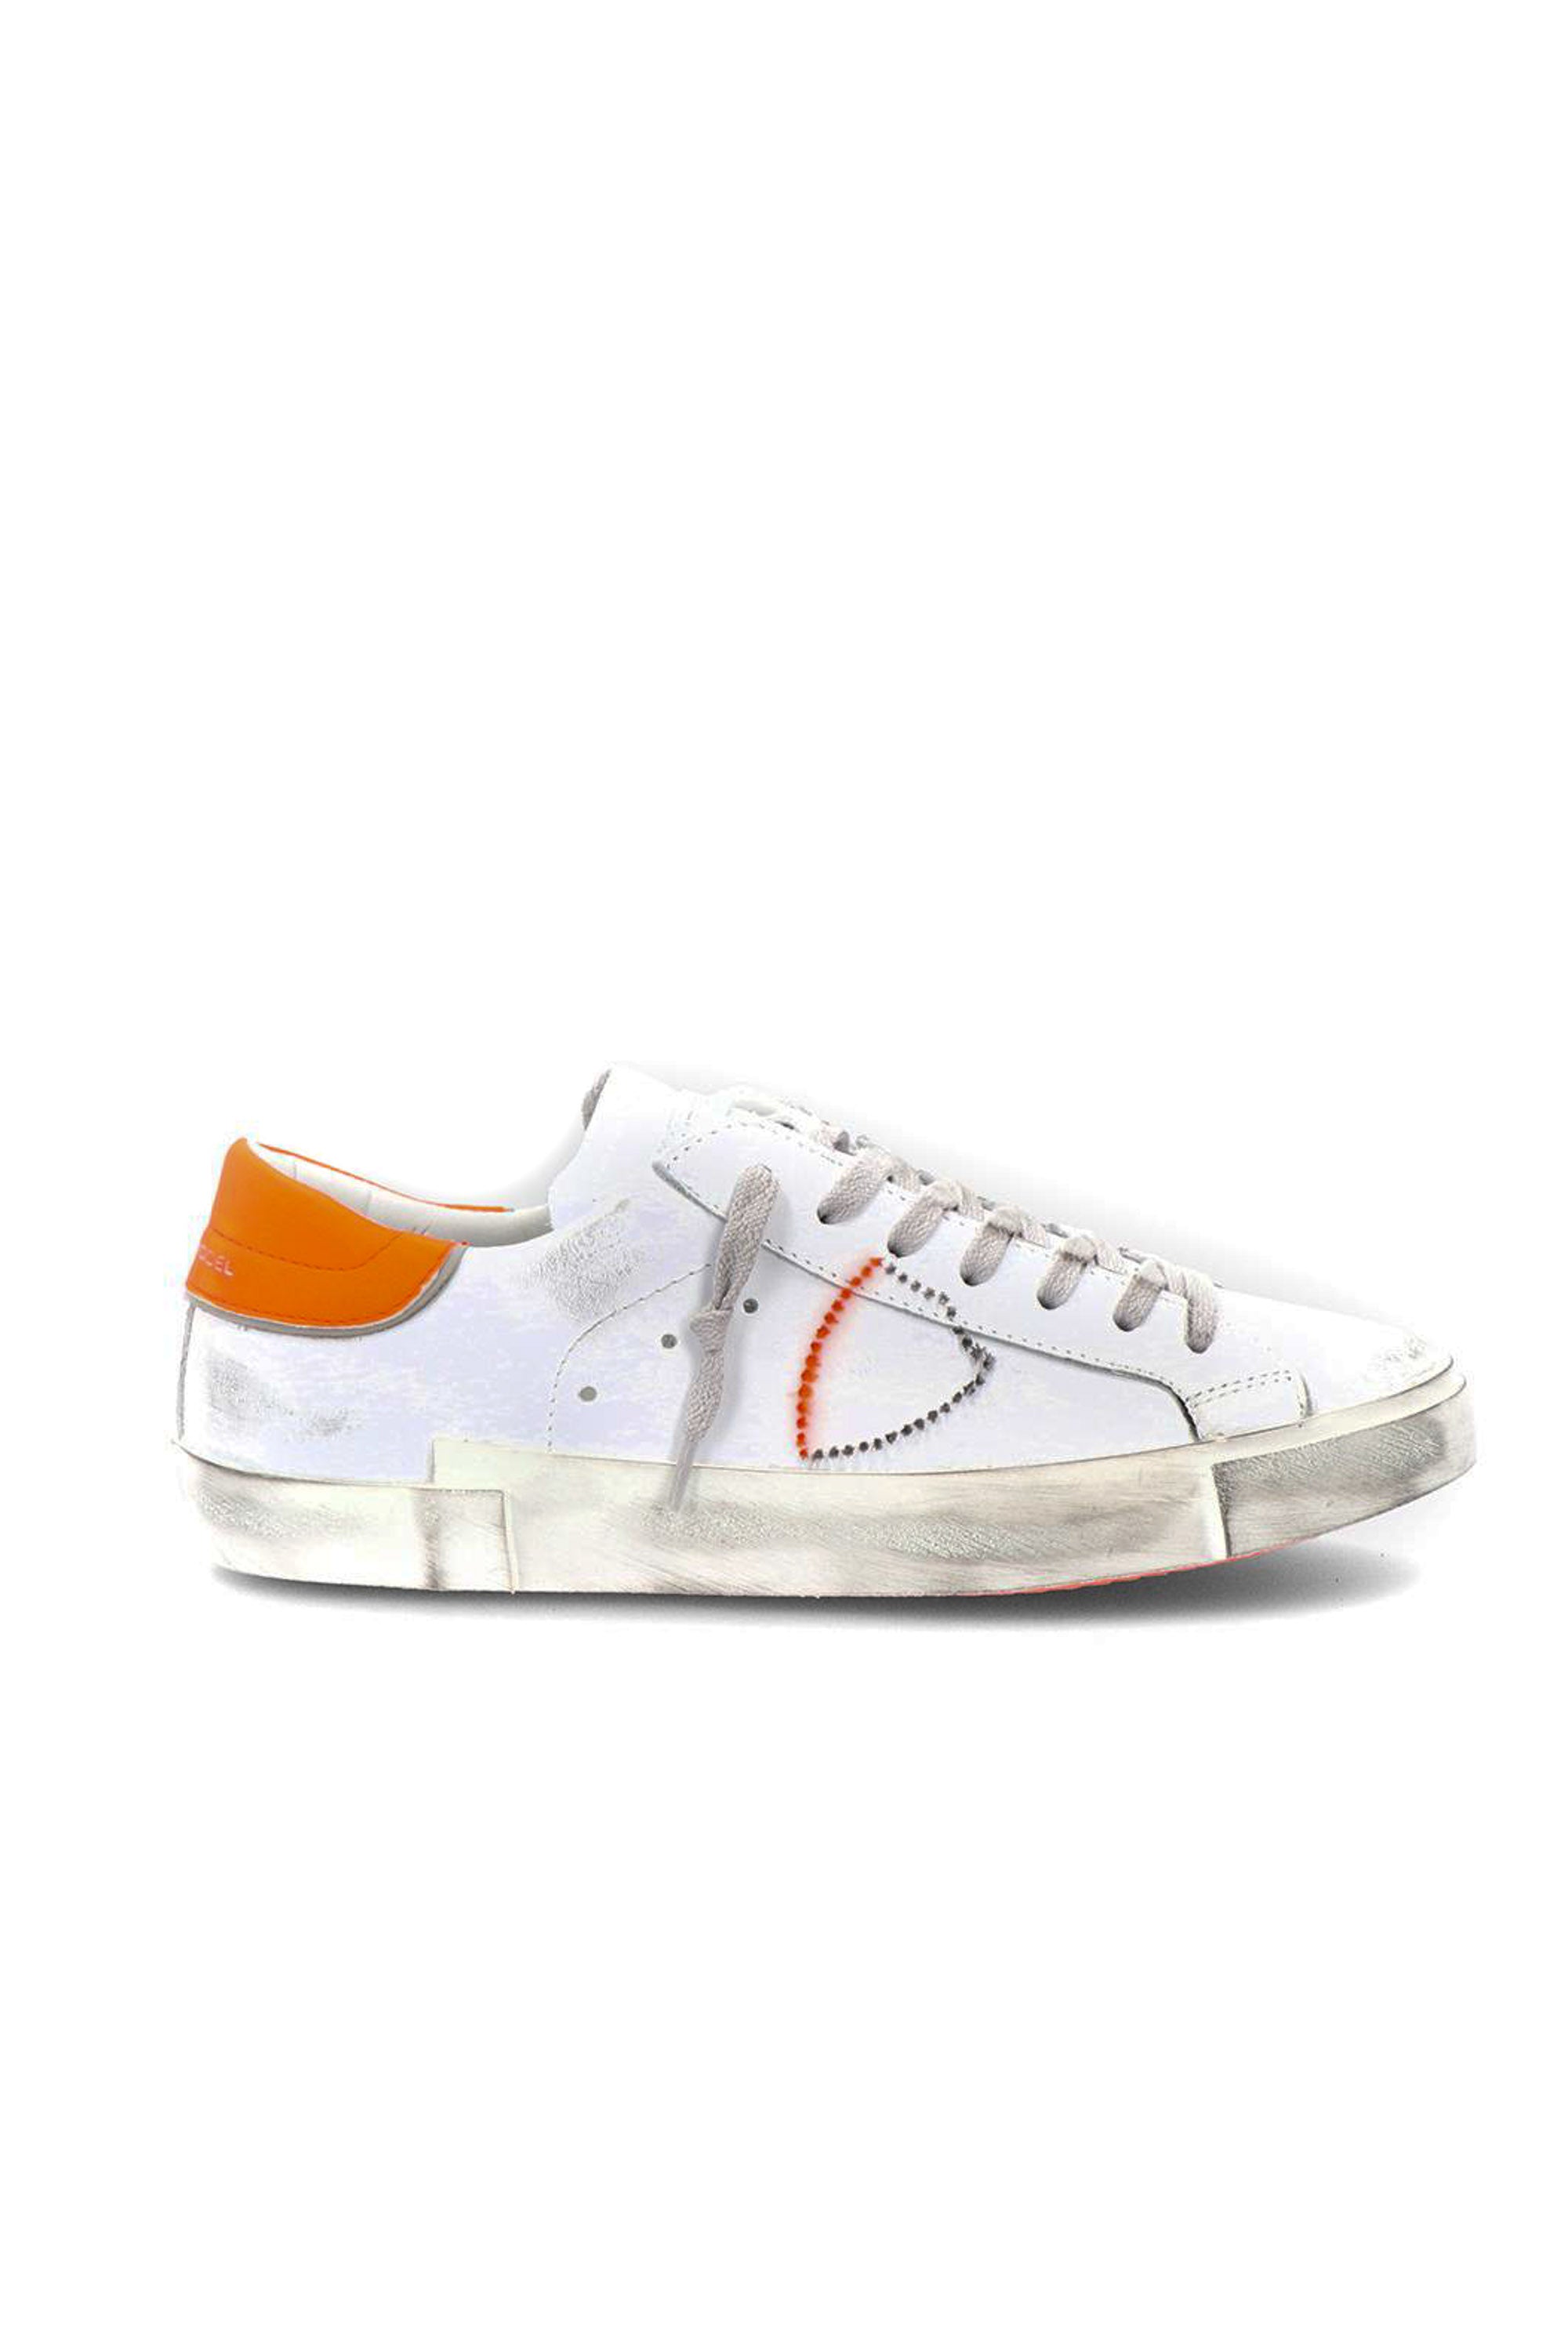 Low prsx sneaker with orange heel tab